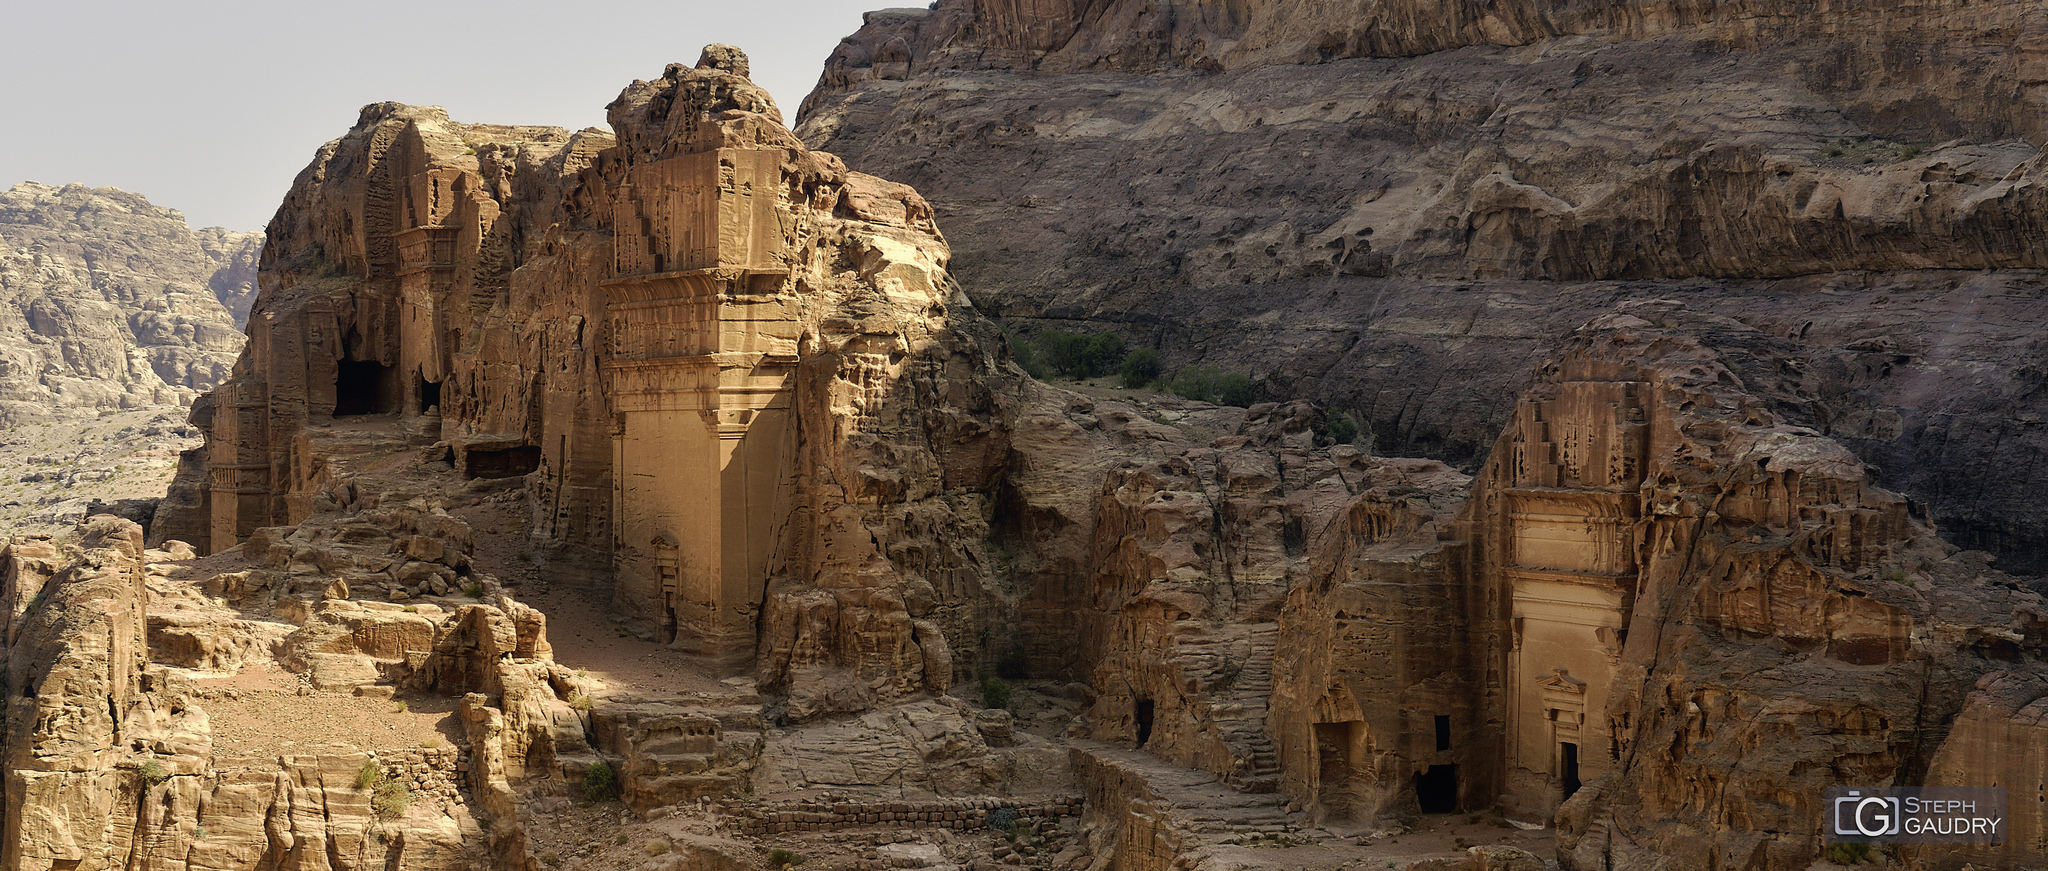 Jordanie, la vallée de Petra [Click to start slideshow]